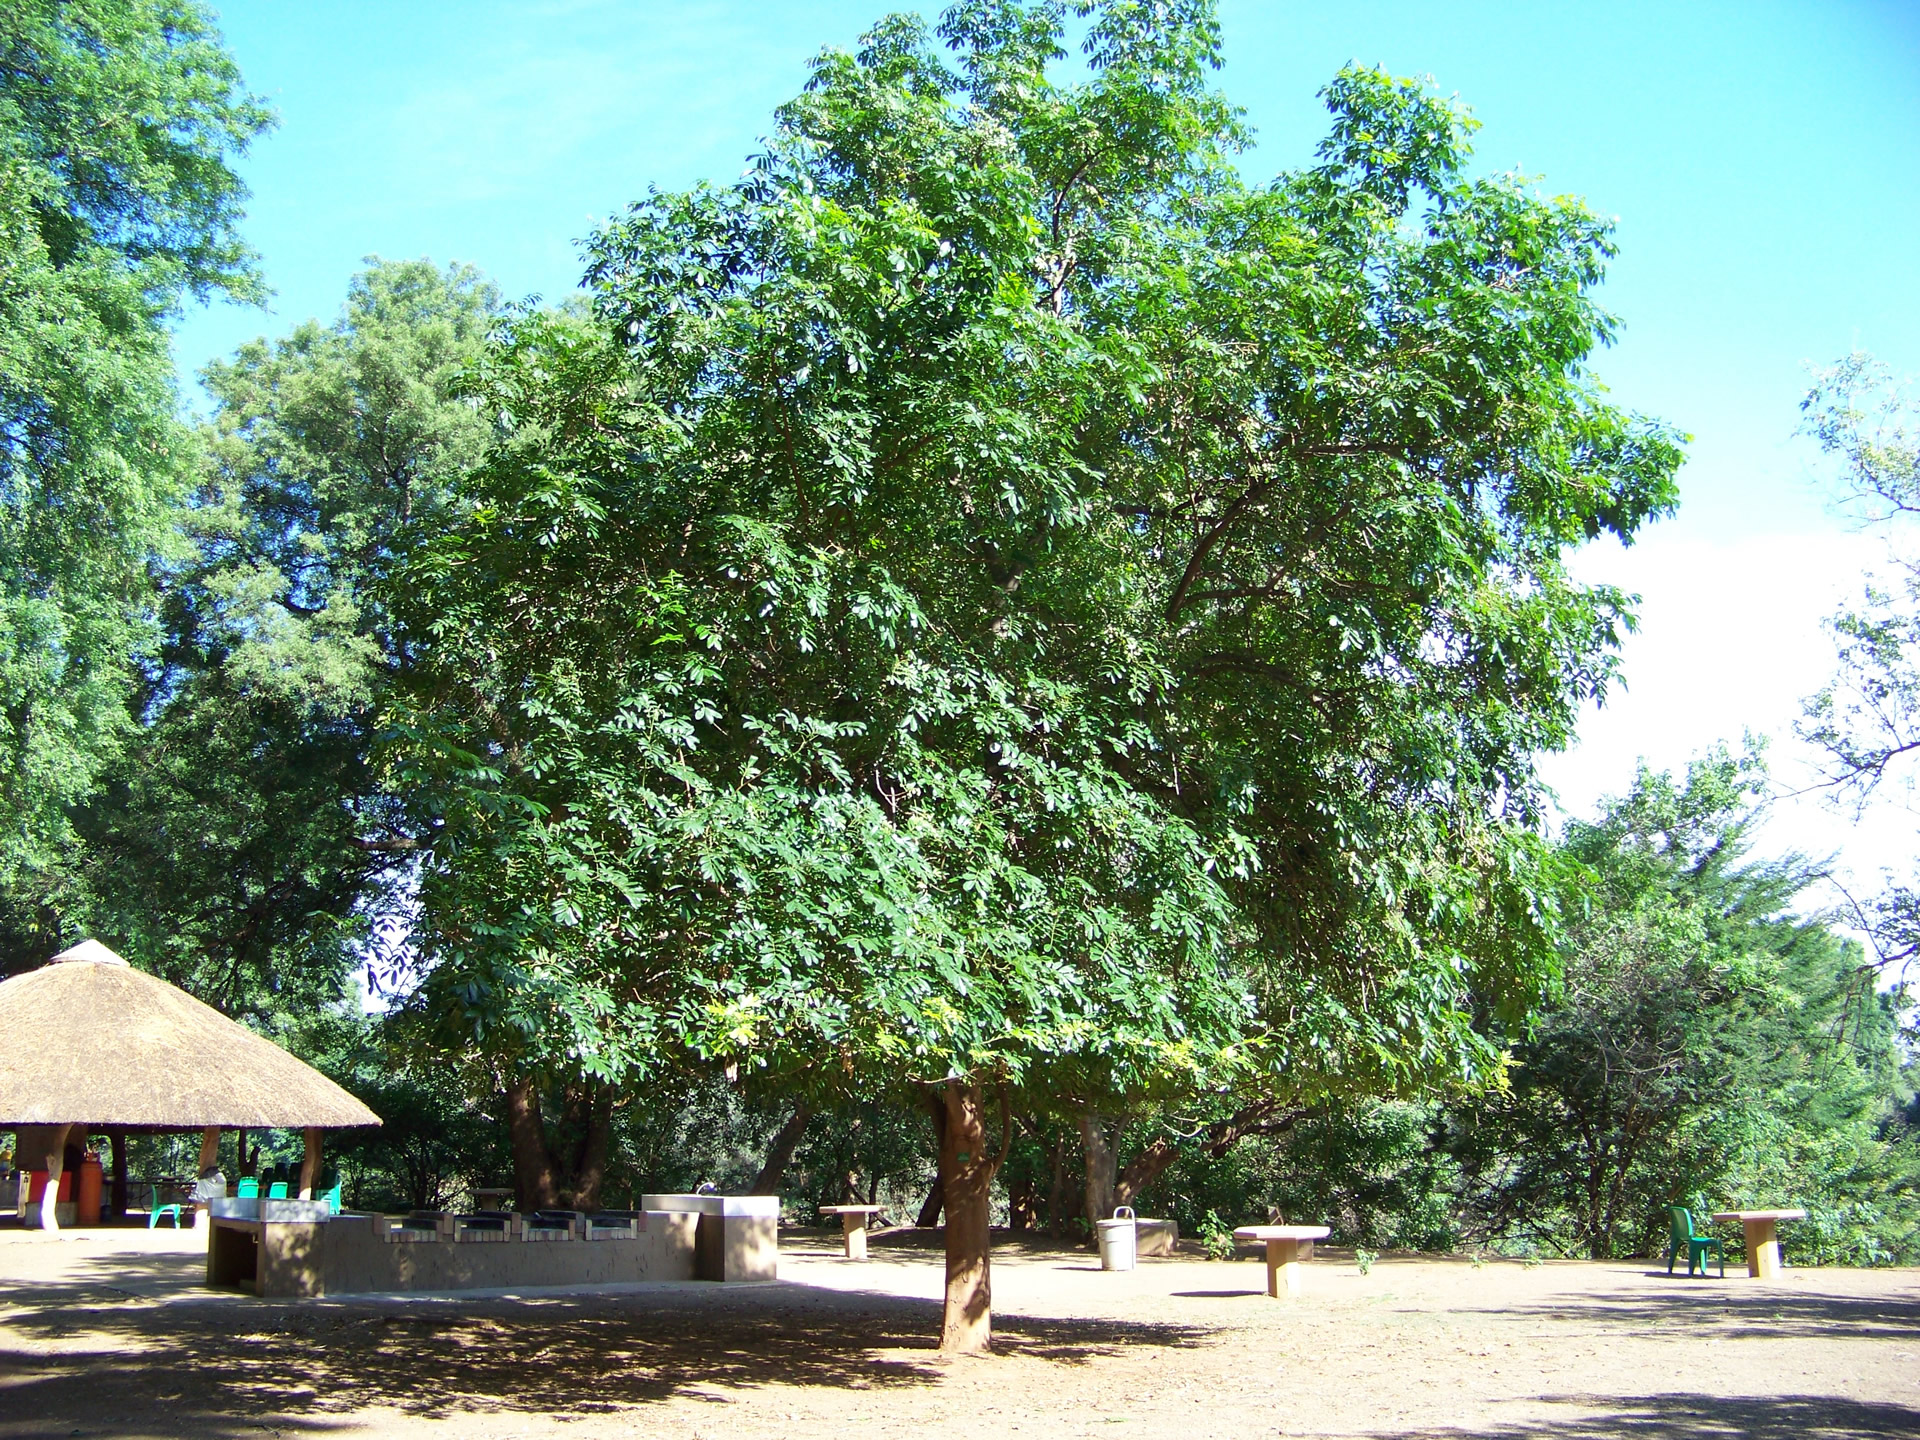 Trichilia emetica (Msikidzi) tree